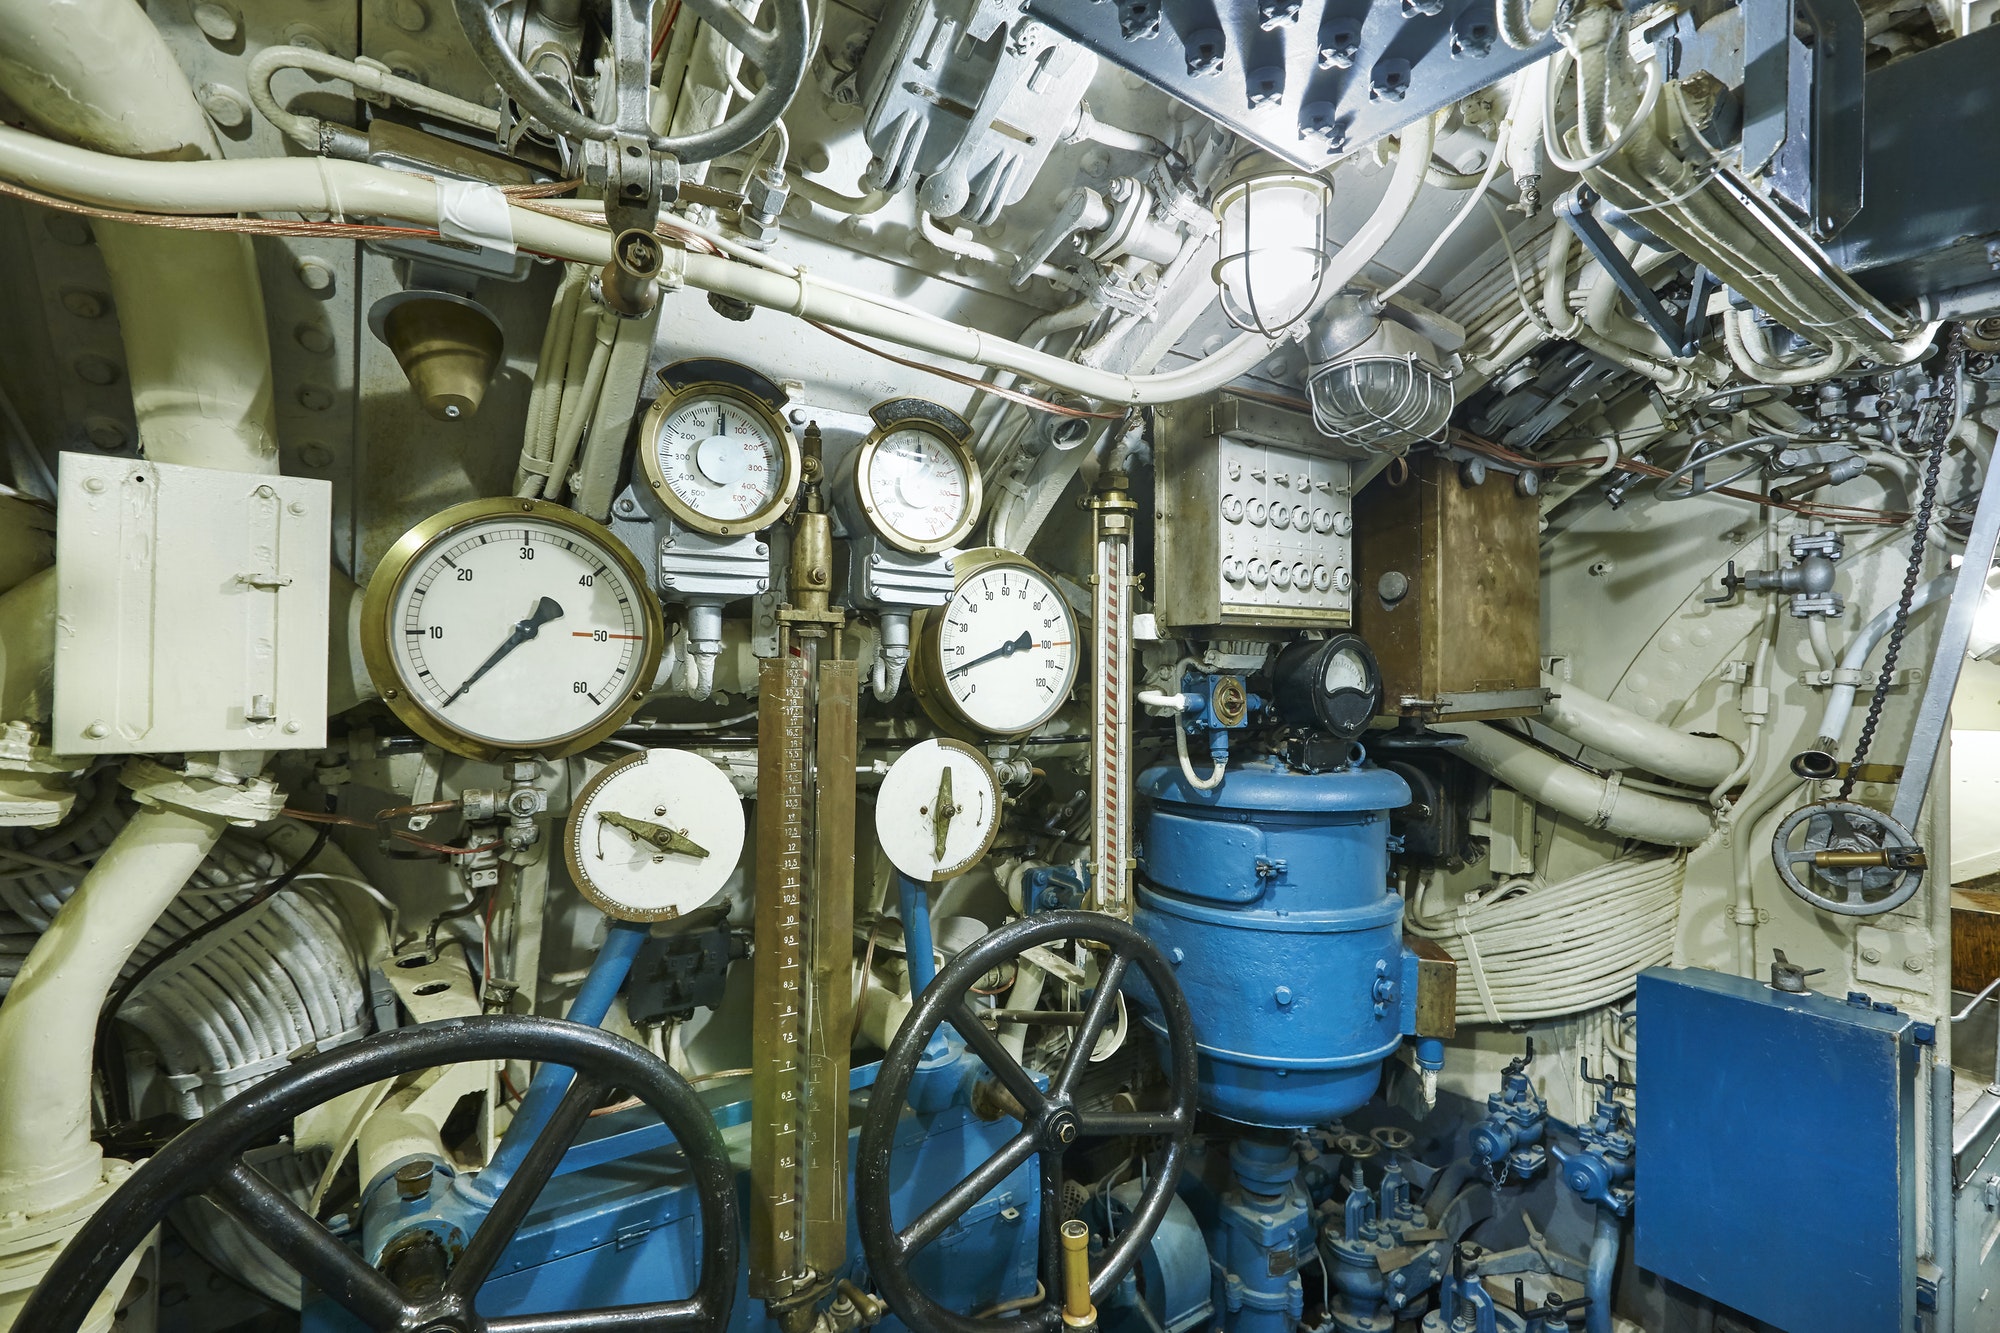 Second war world submarine interior. Military vessel. Horizontal